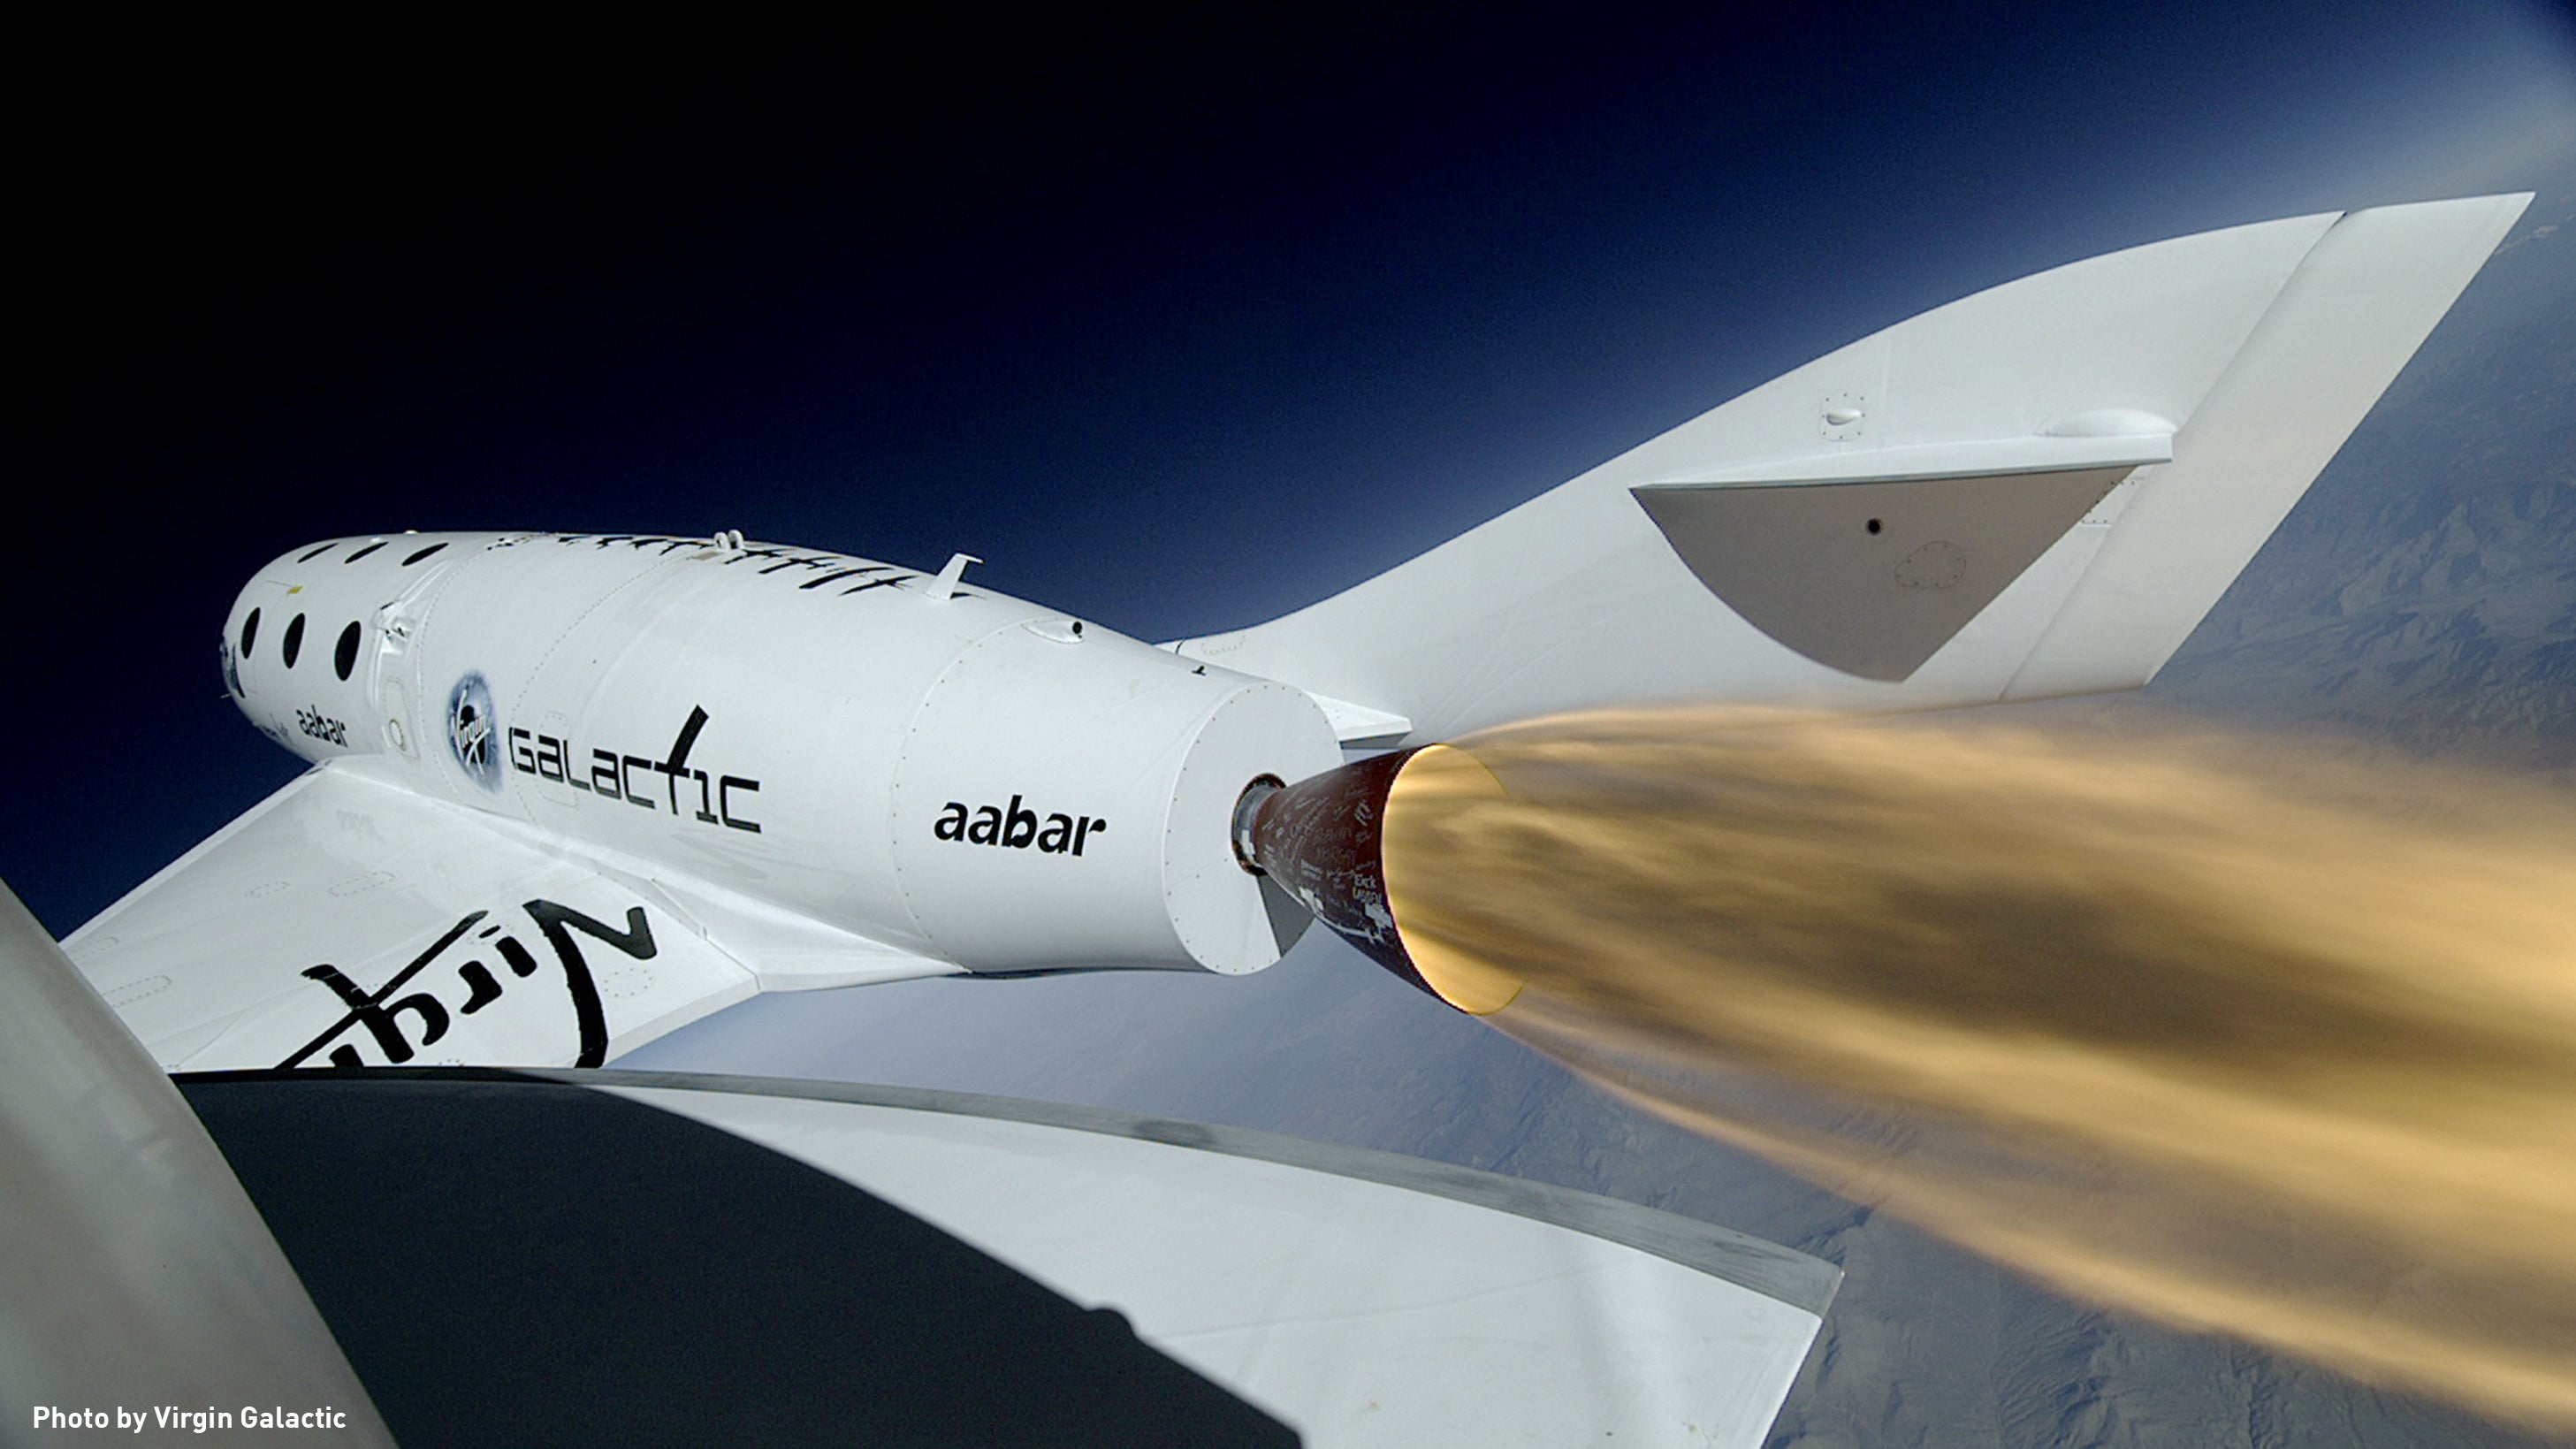 Virgin Galactic's SpaceShip Two The VSS Enterprise achieved rocket flight April 2013.